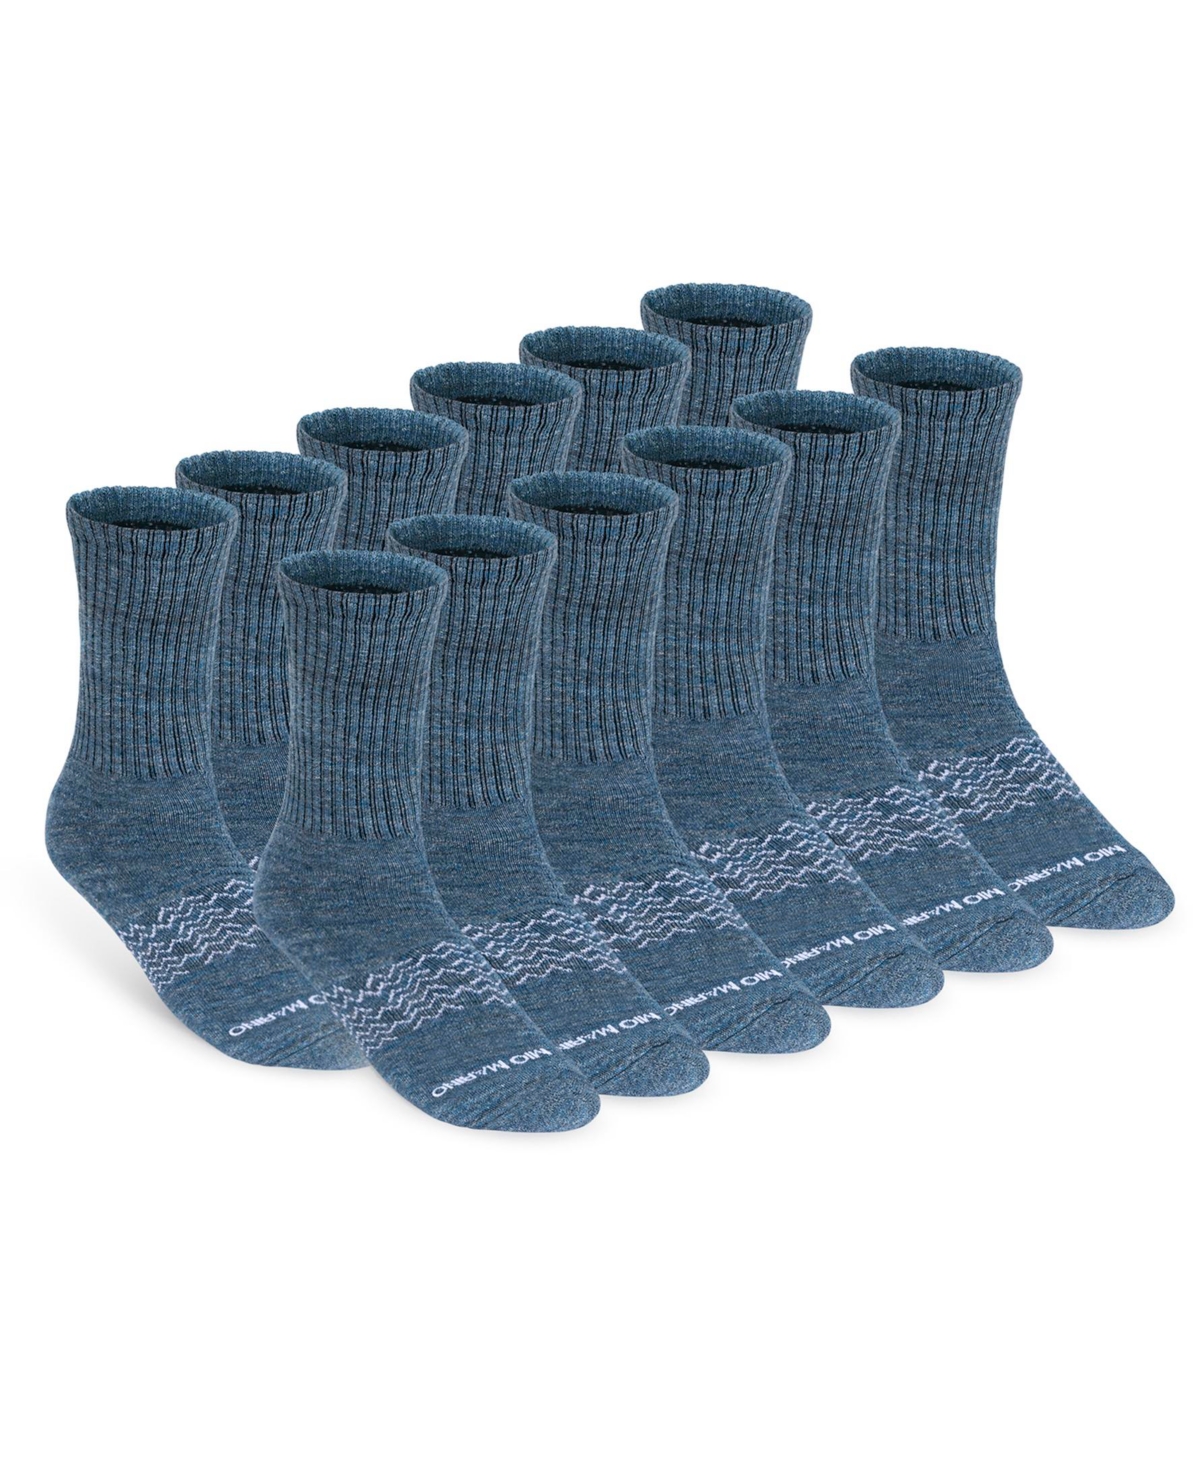 Men's Moisture Control Athletic Crew Socks12 Pack - Azure - space dye